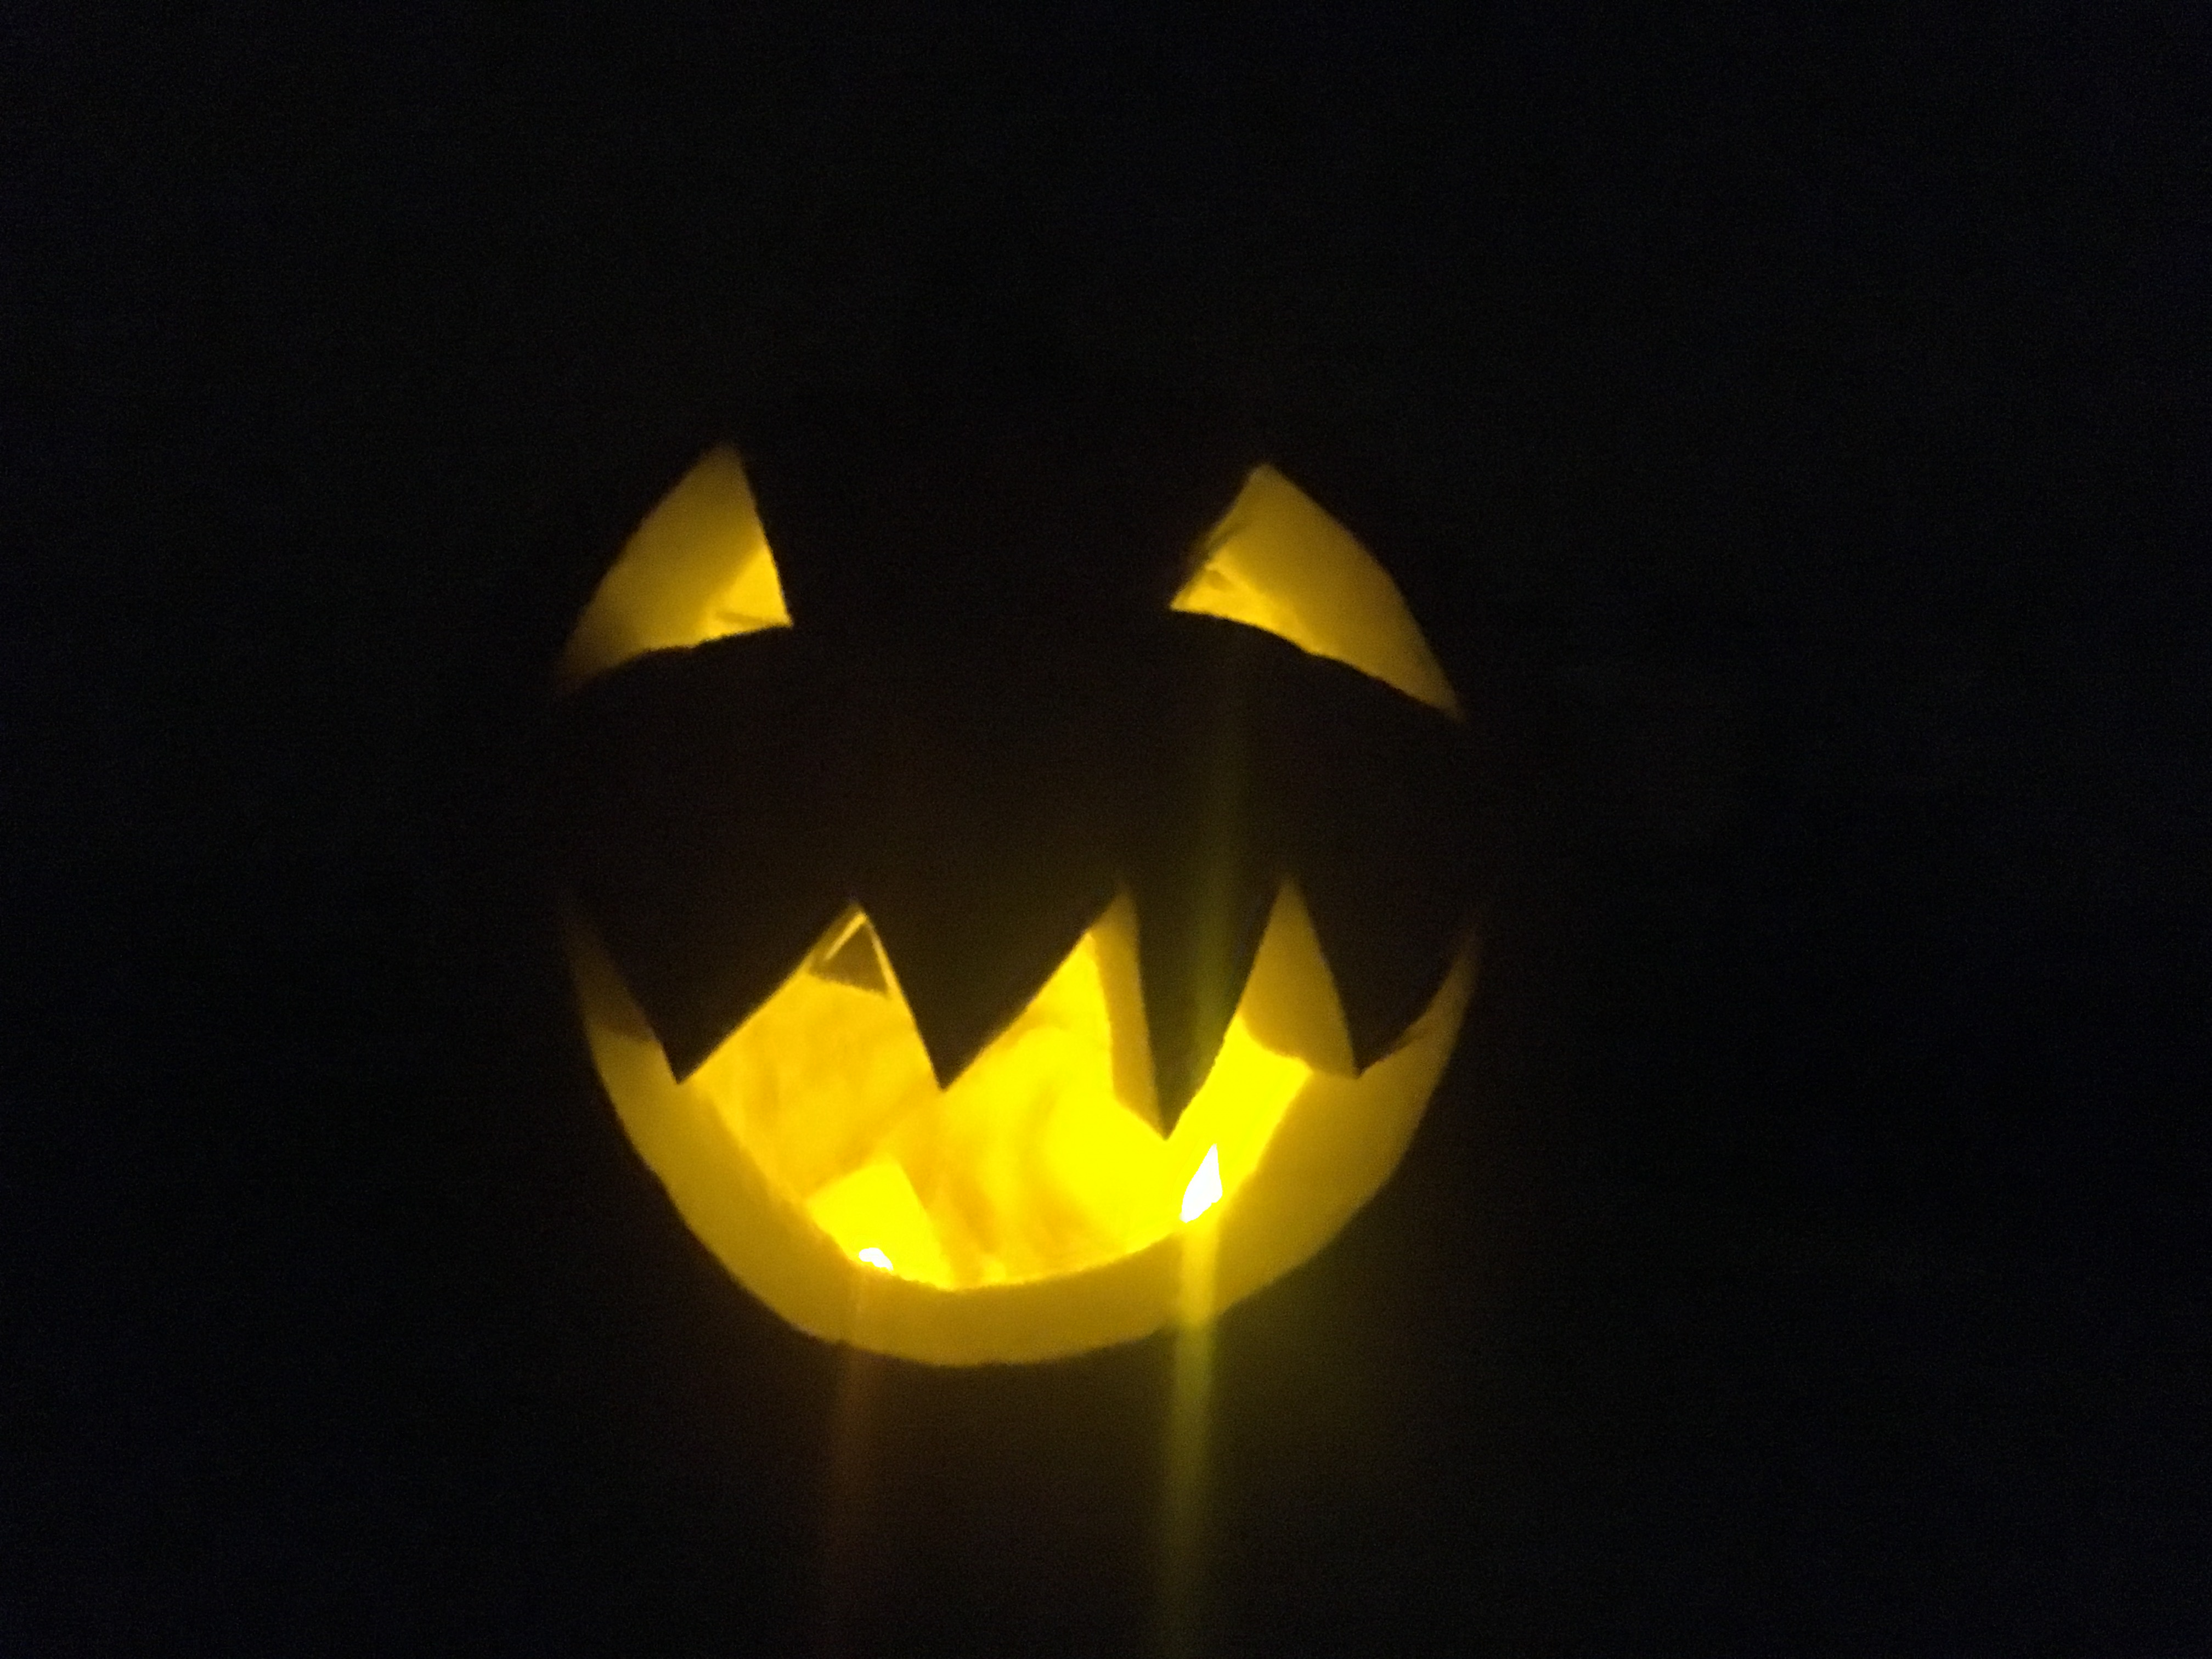 A glowing pumpkin